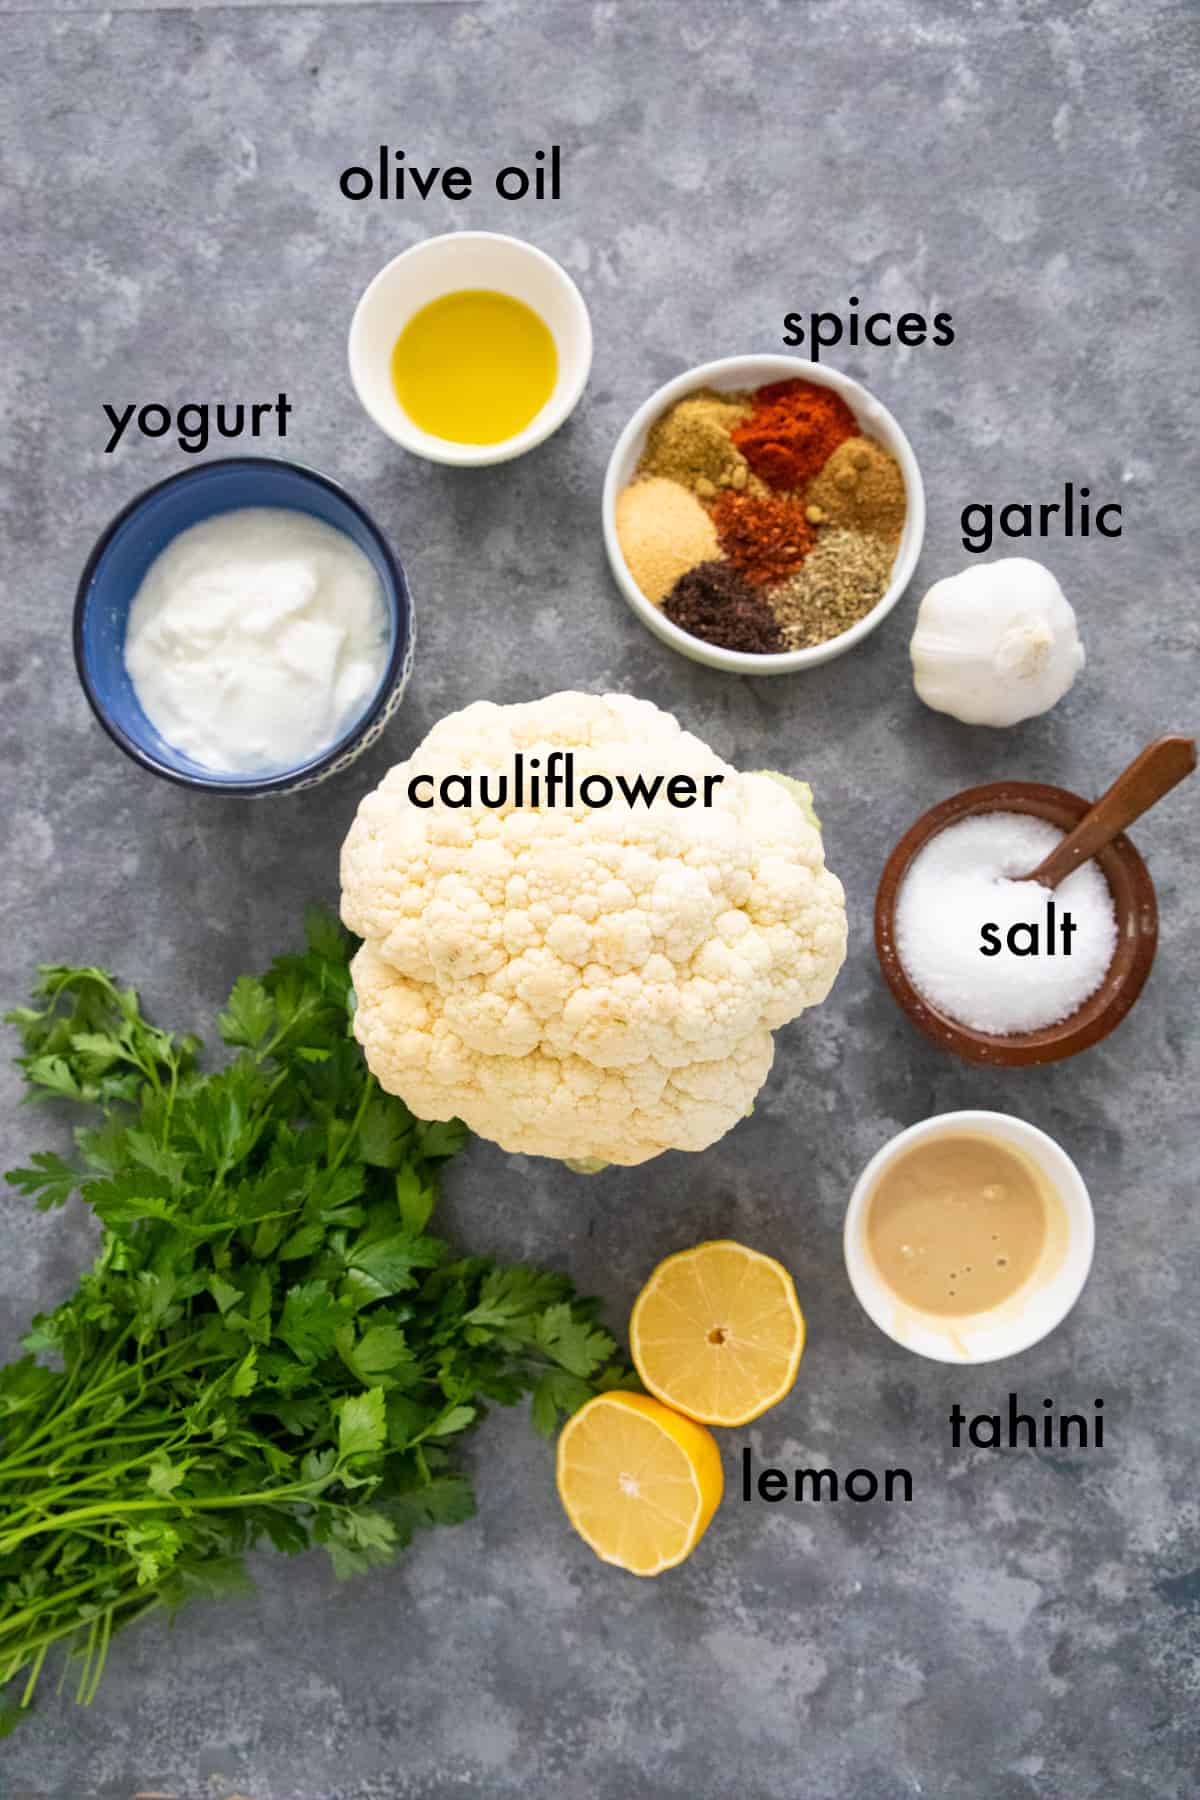 To make this recipe you need cauliflower, spices, olive oil, yogurt and tahini plus lemon. 